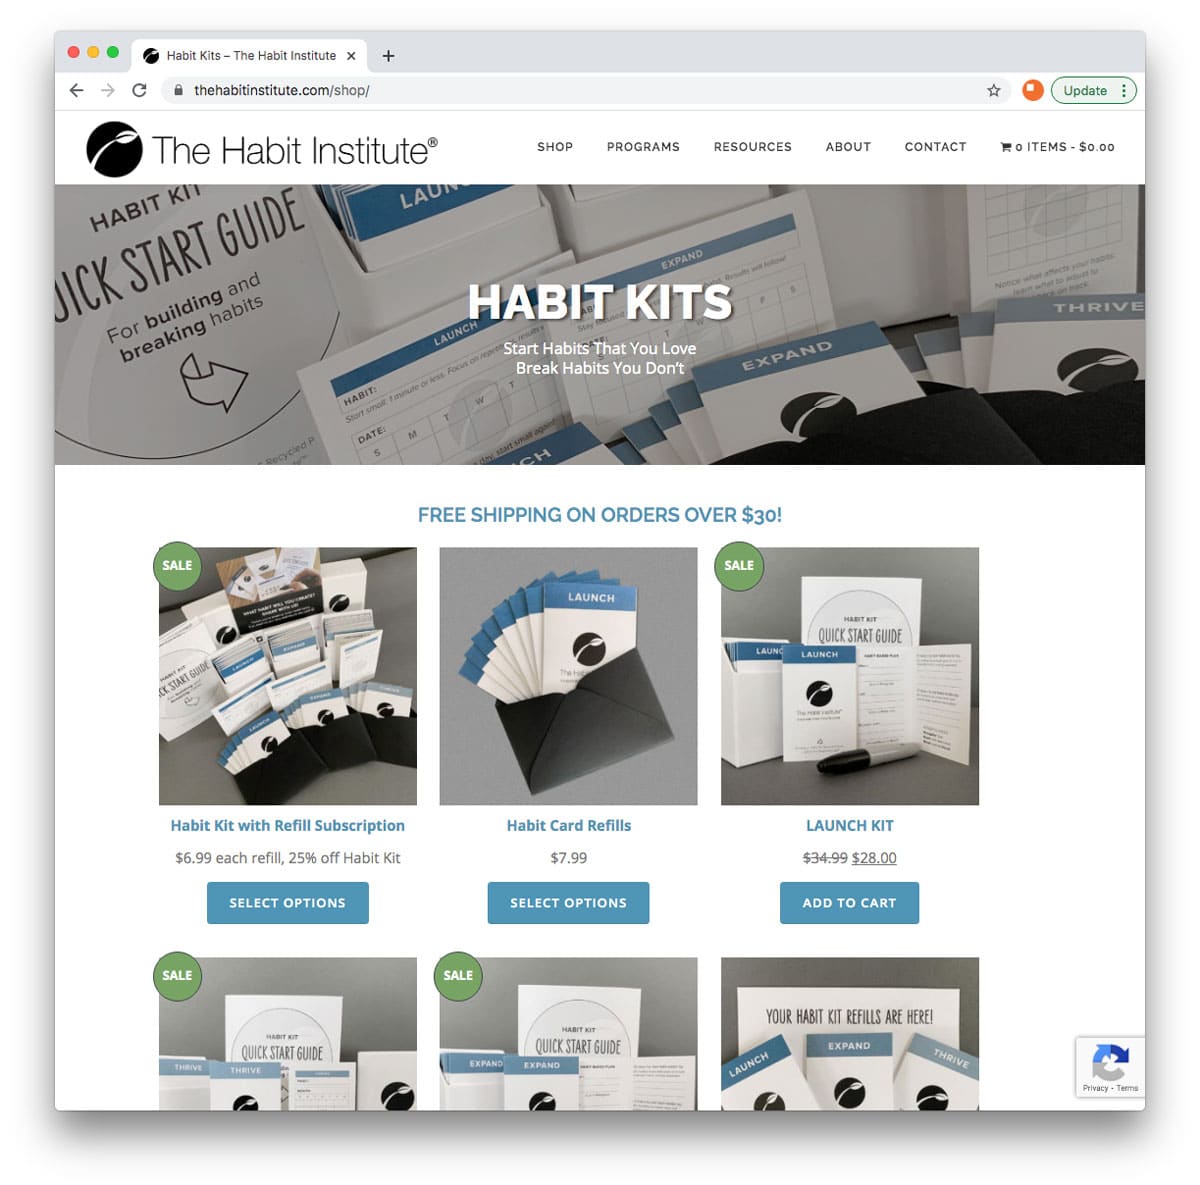 Habit Kit storefront website design with product list